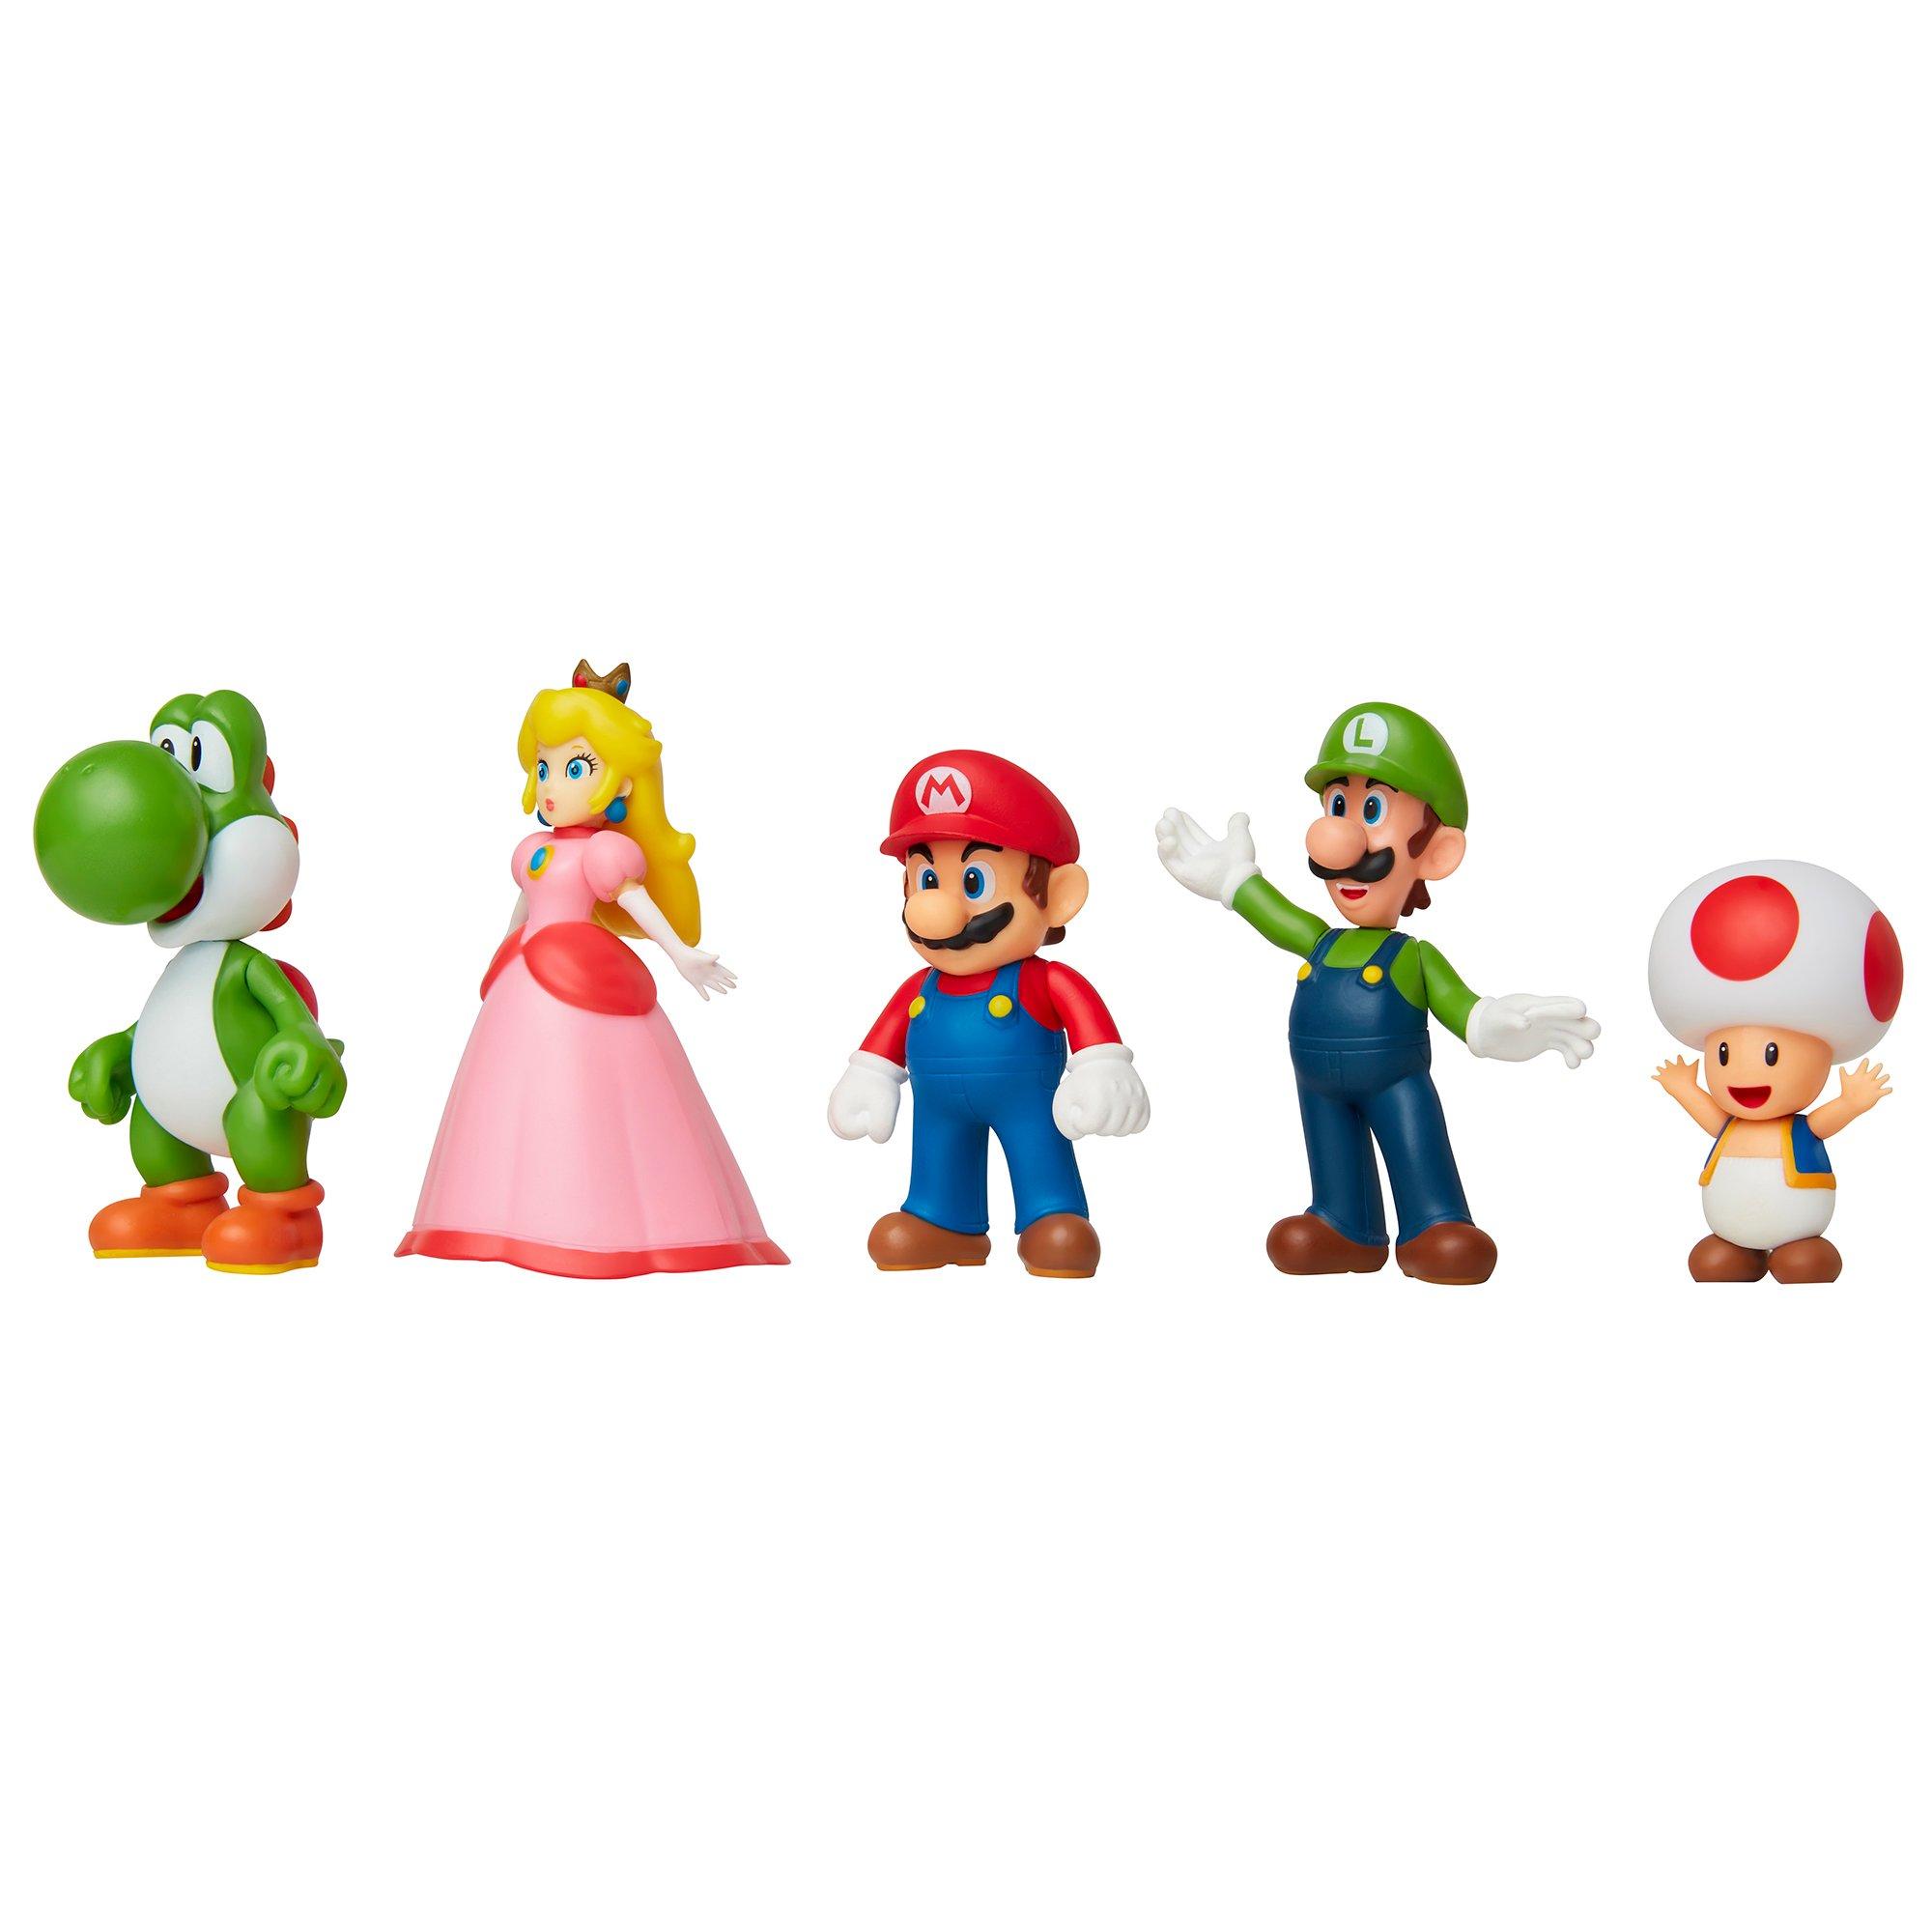 Jakks Pacific Super Mario Bros Mario And Friends Multi Pack Action Figures 9052